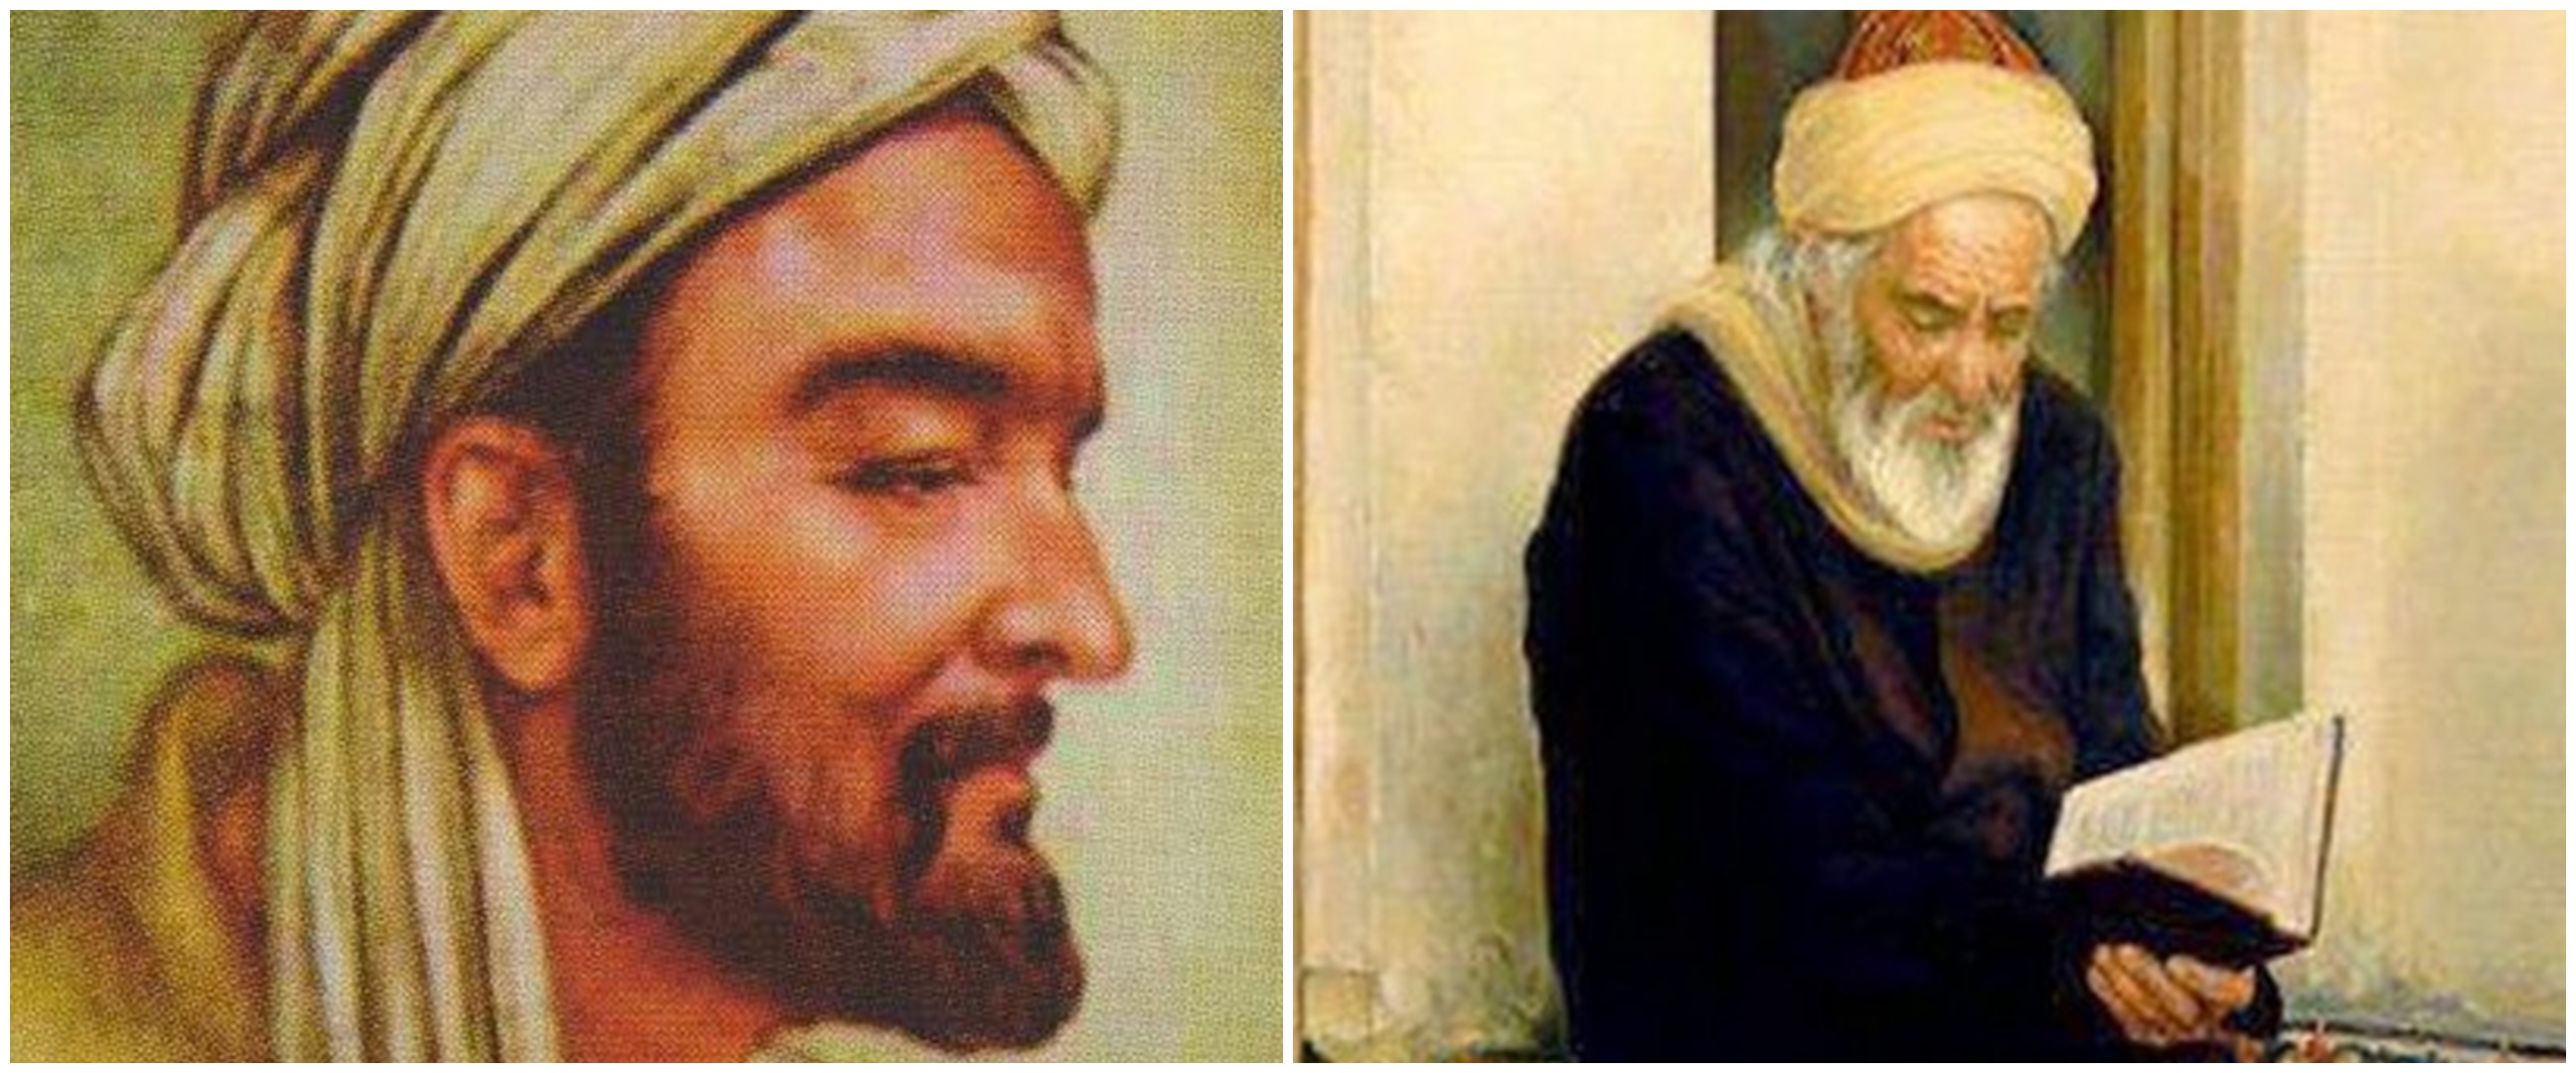 40 Kata-kata bijak filsafat Islam dari filsuf terkenal, penuh makna